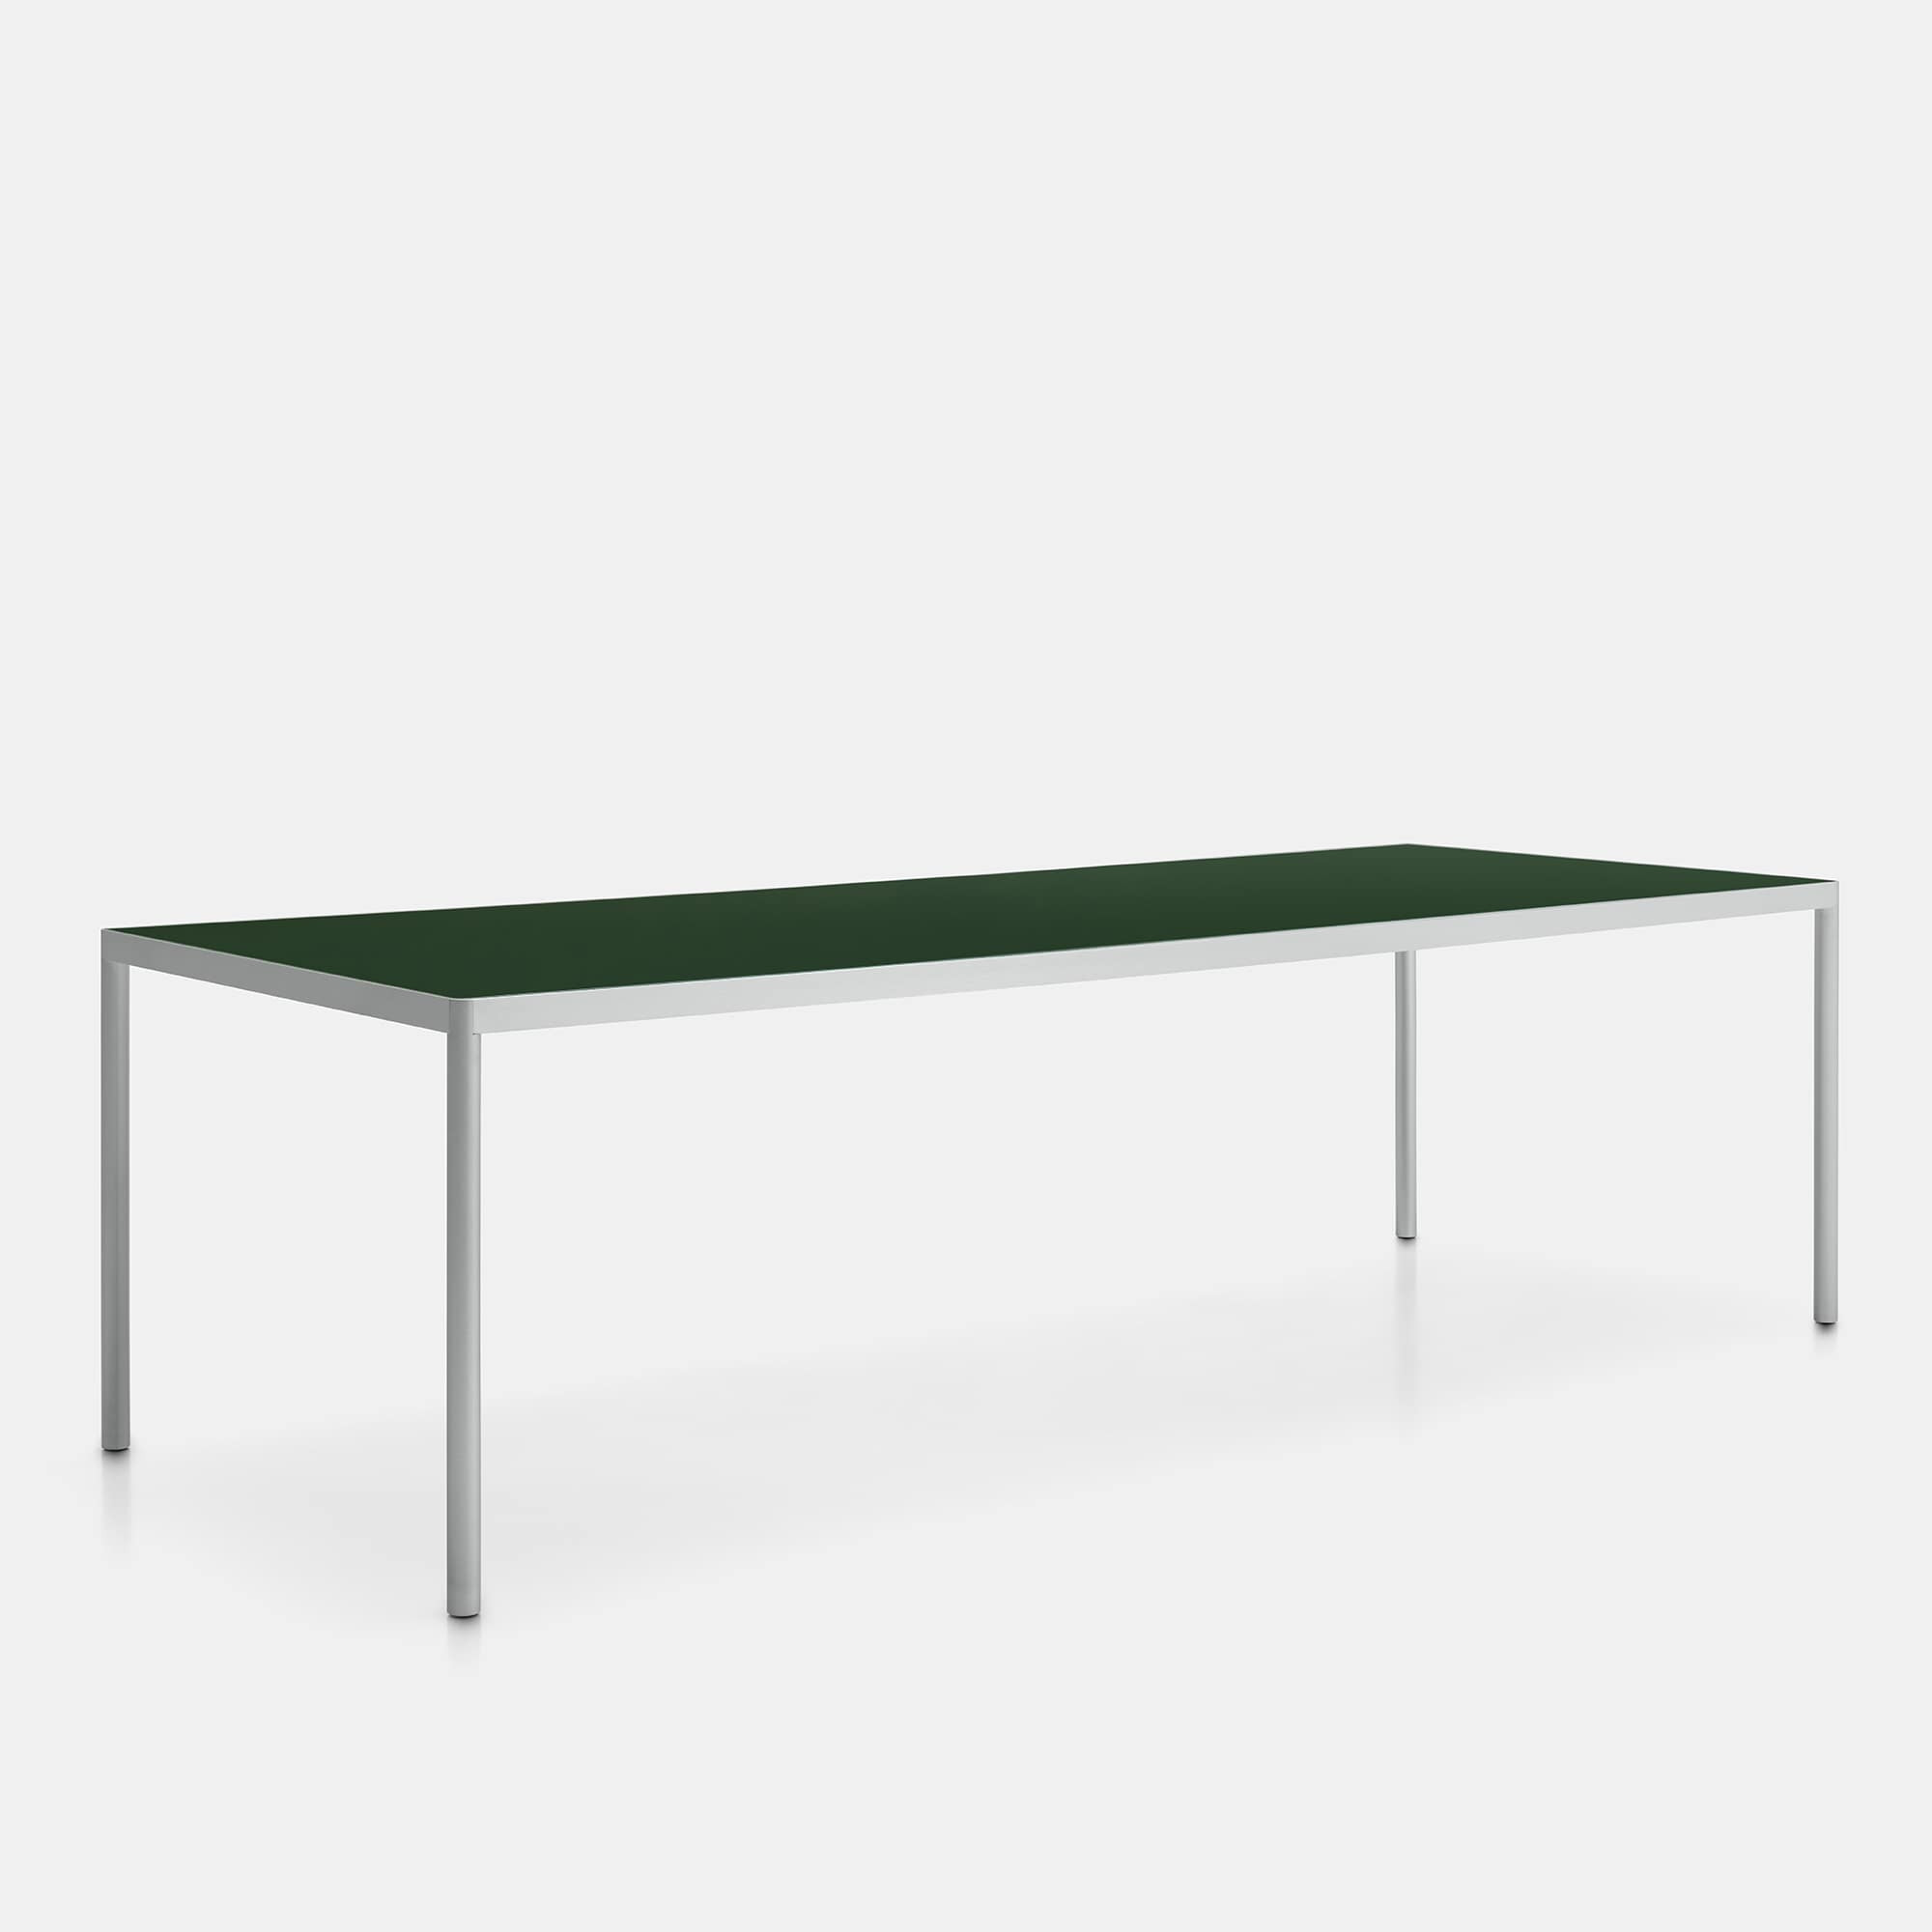 Offset Indoor / Outdoor Table ☞ Use: Indoor ☞ Structure: Matt Painted Lead Black X138 ☞ Top: Reconstructed Stone Black Slate X132